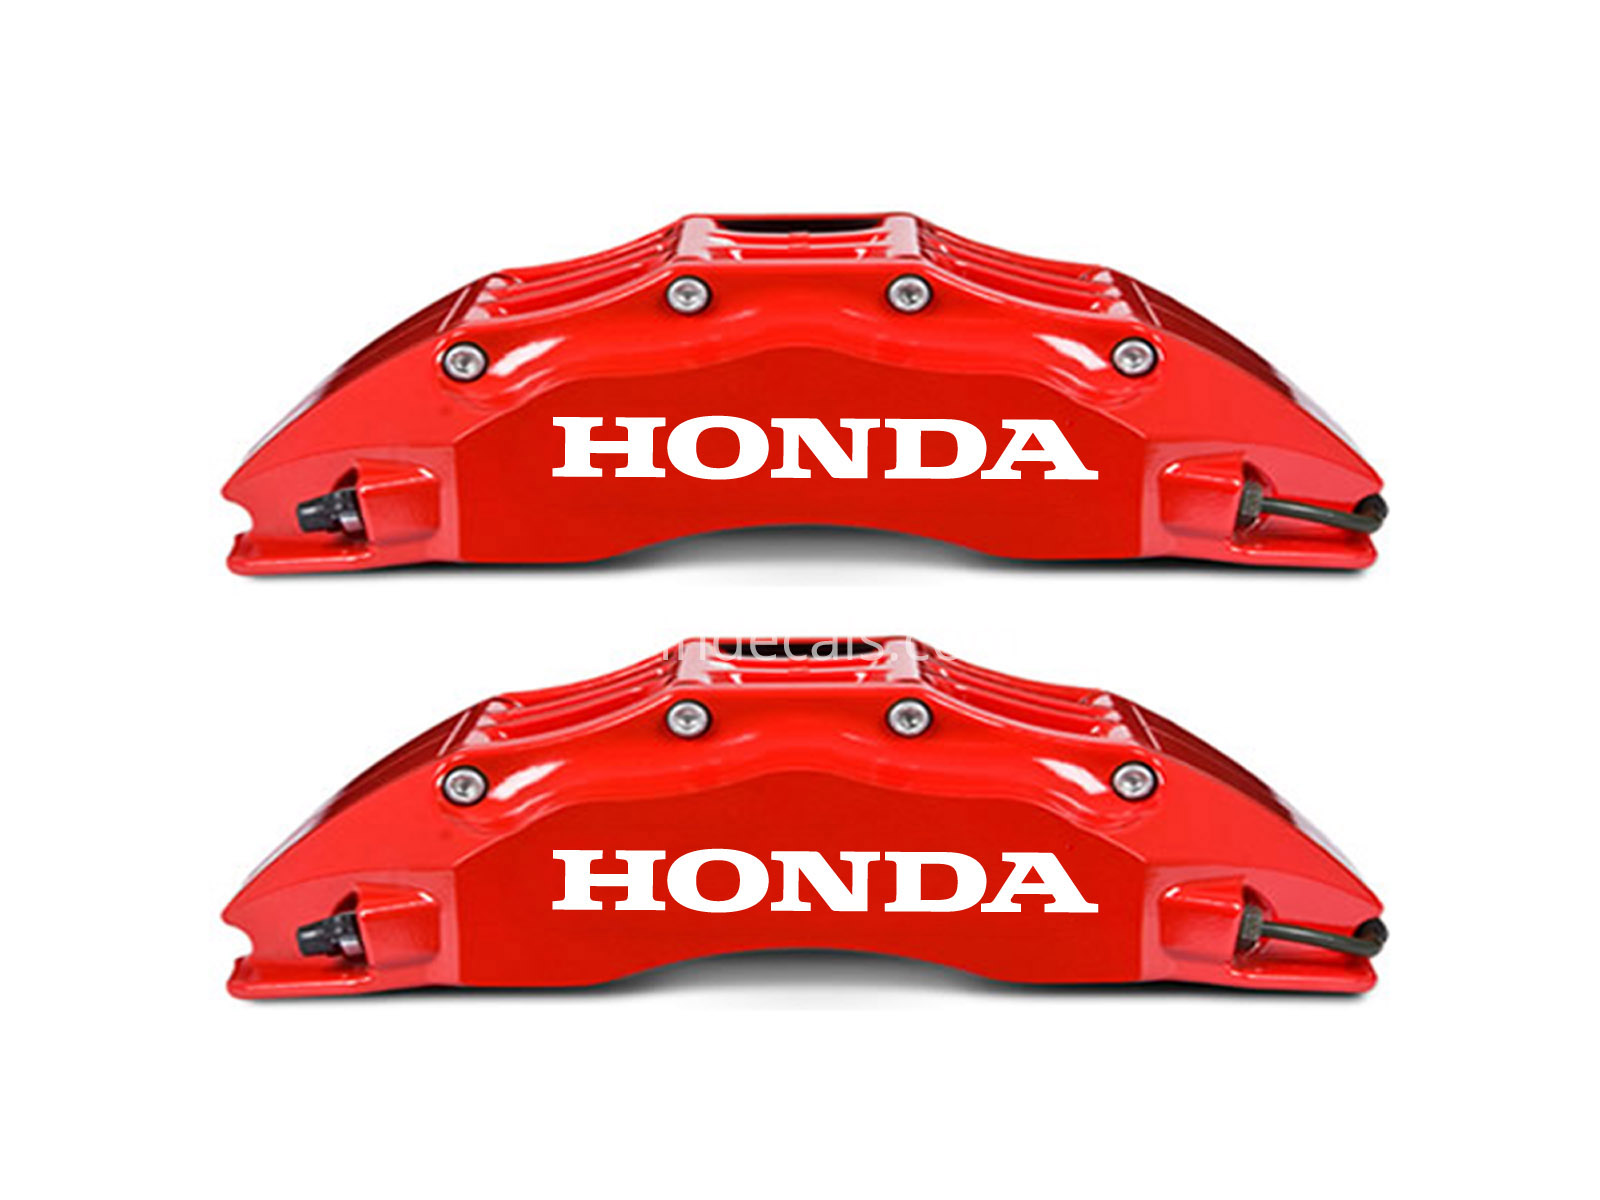 6 x Honda Stickers for Brakes - White